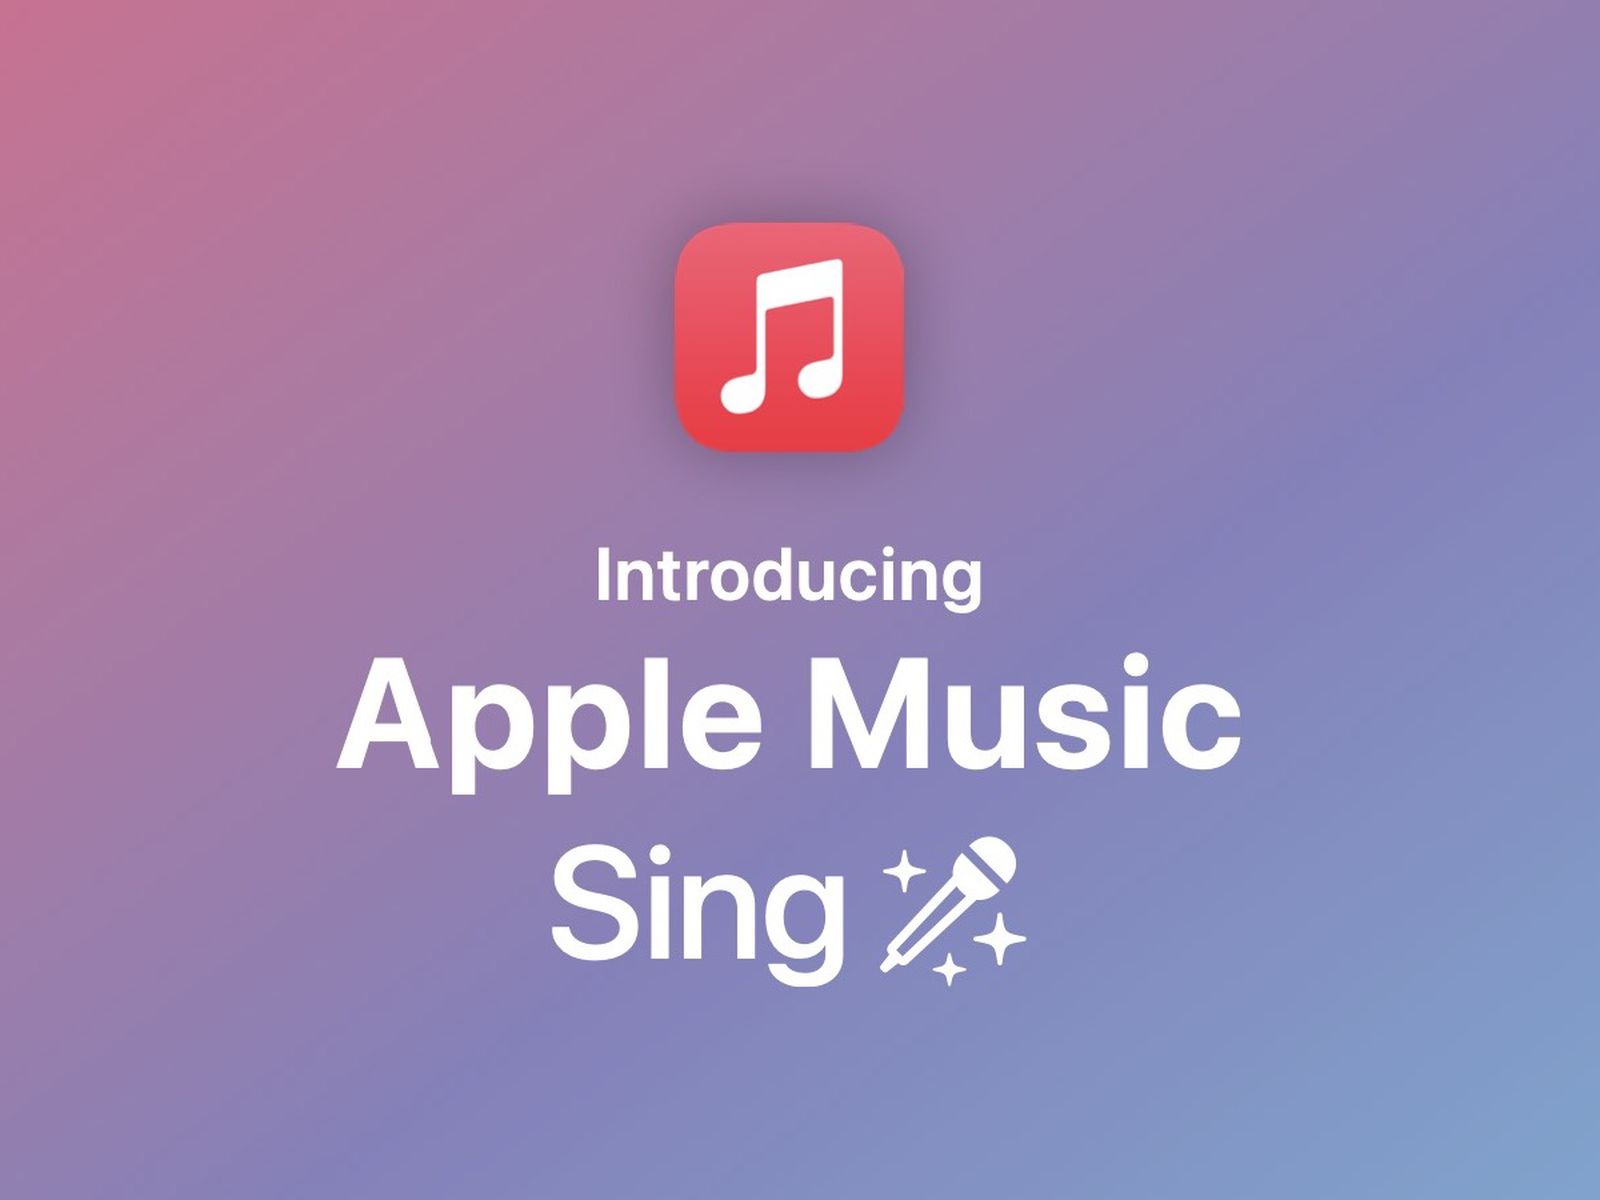 Af Gud Er deprimeret temperatur Apple Music Adding a Karaoke Experience With Apple Music Sing - MacRumors